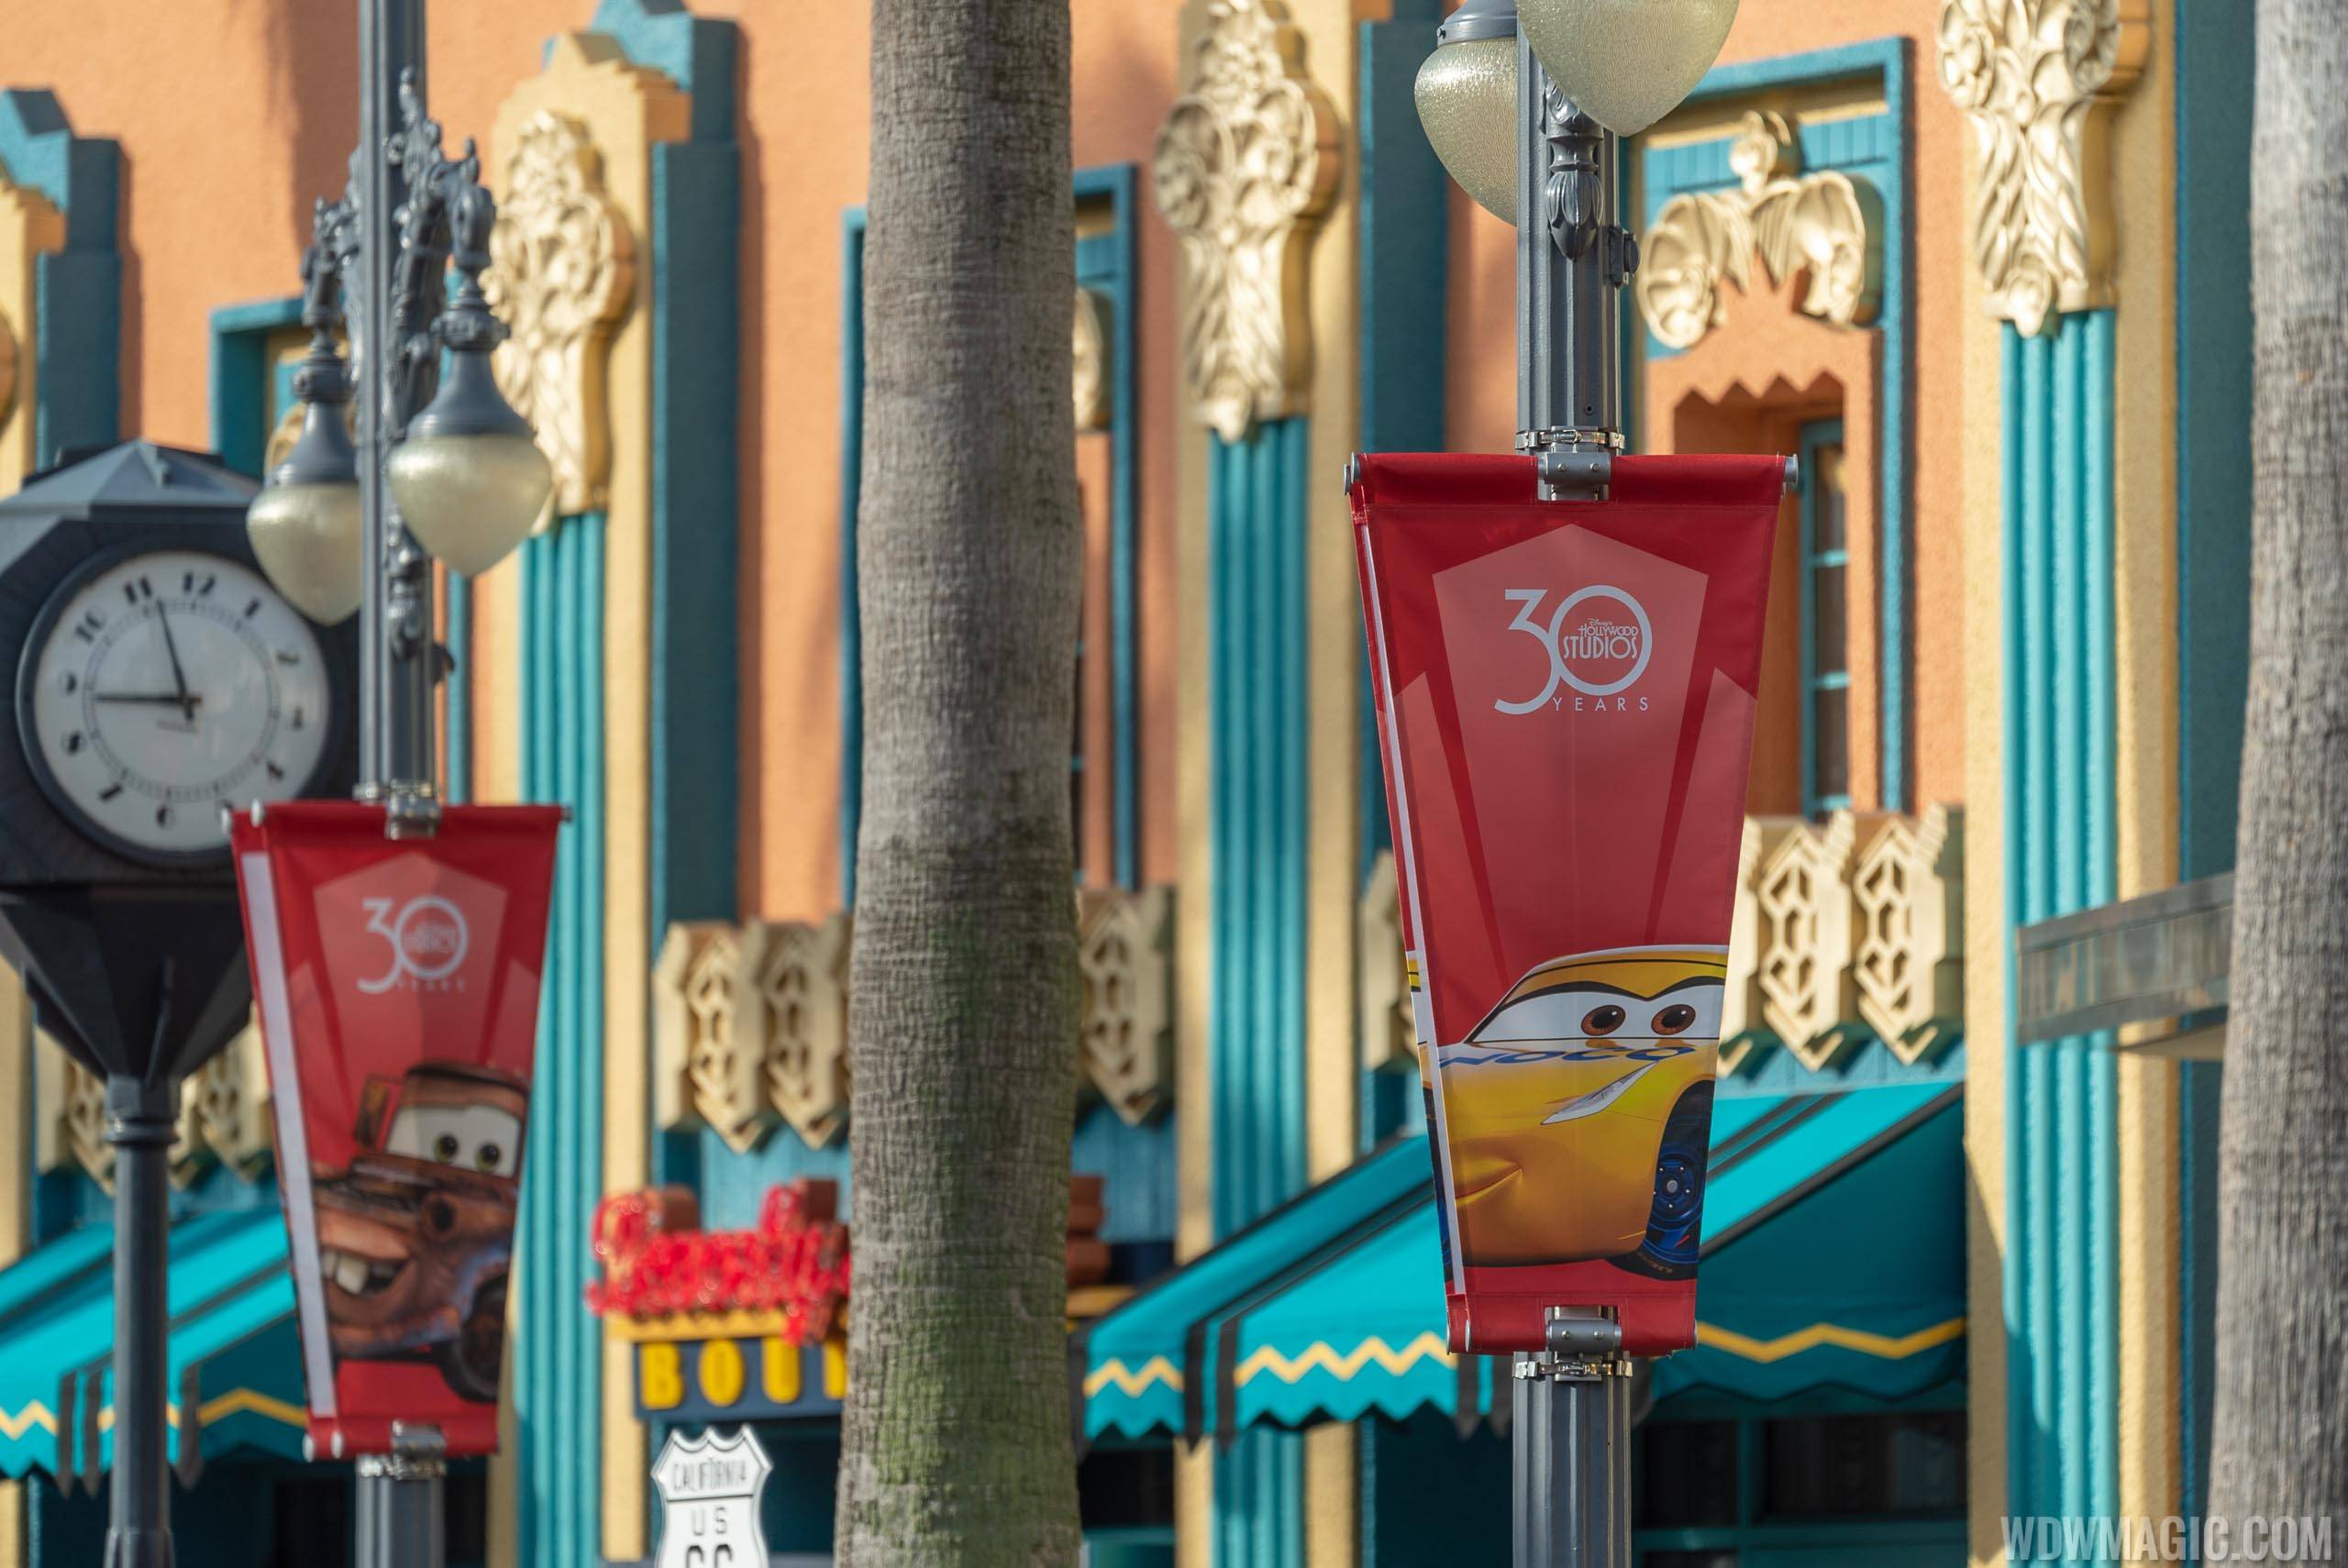 Disney's Hollywood Studios 30th Anniversary banners